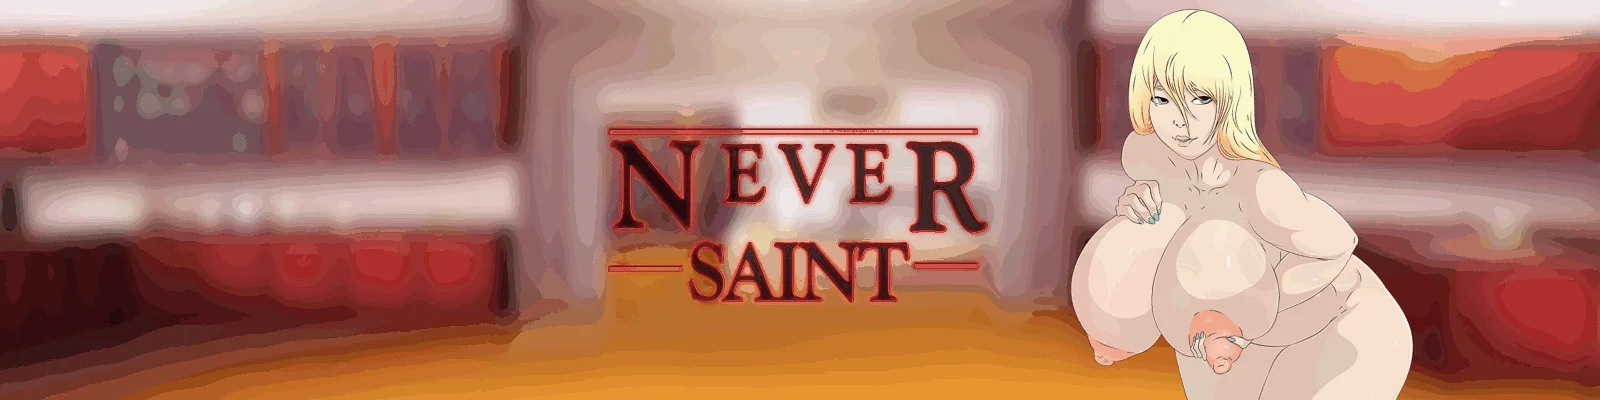 Never Saint v.0.20 Public